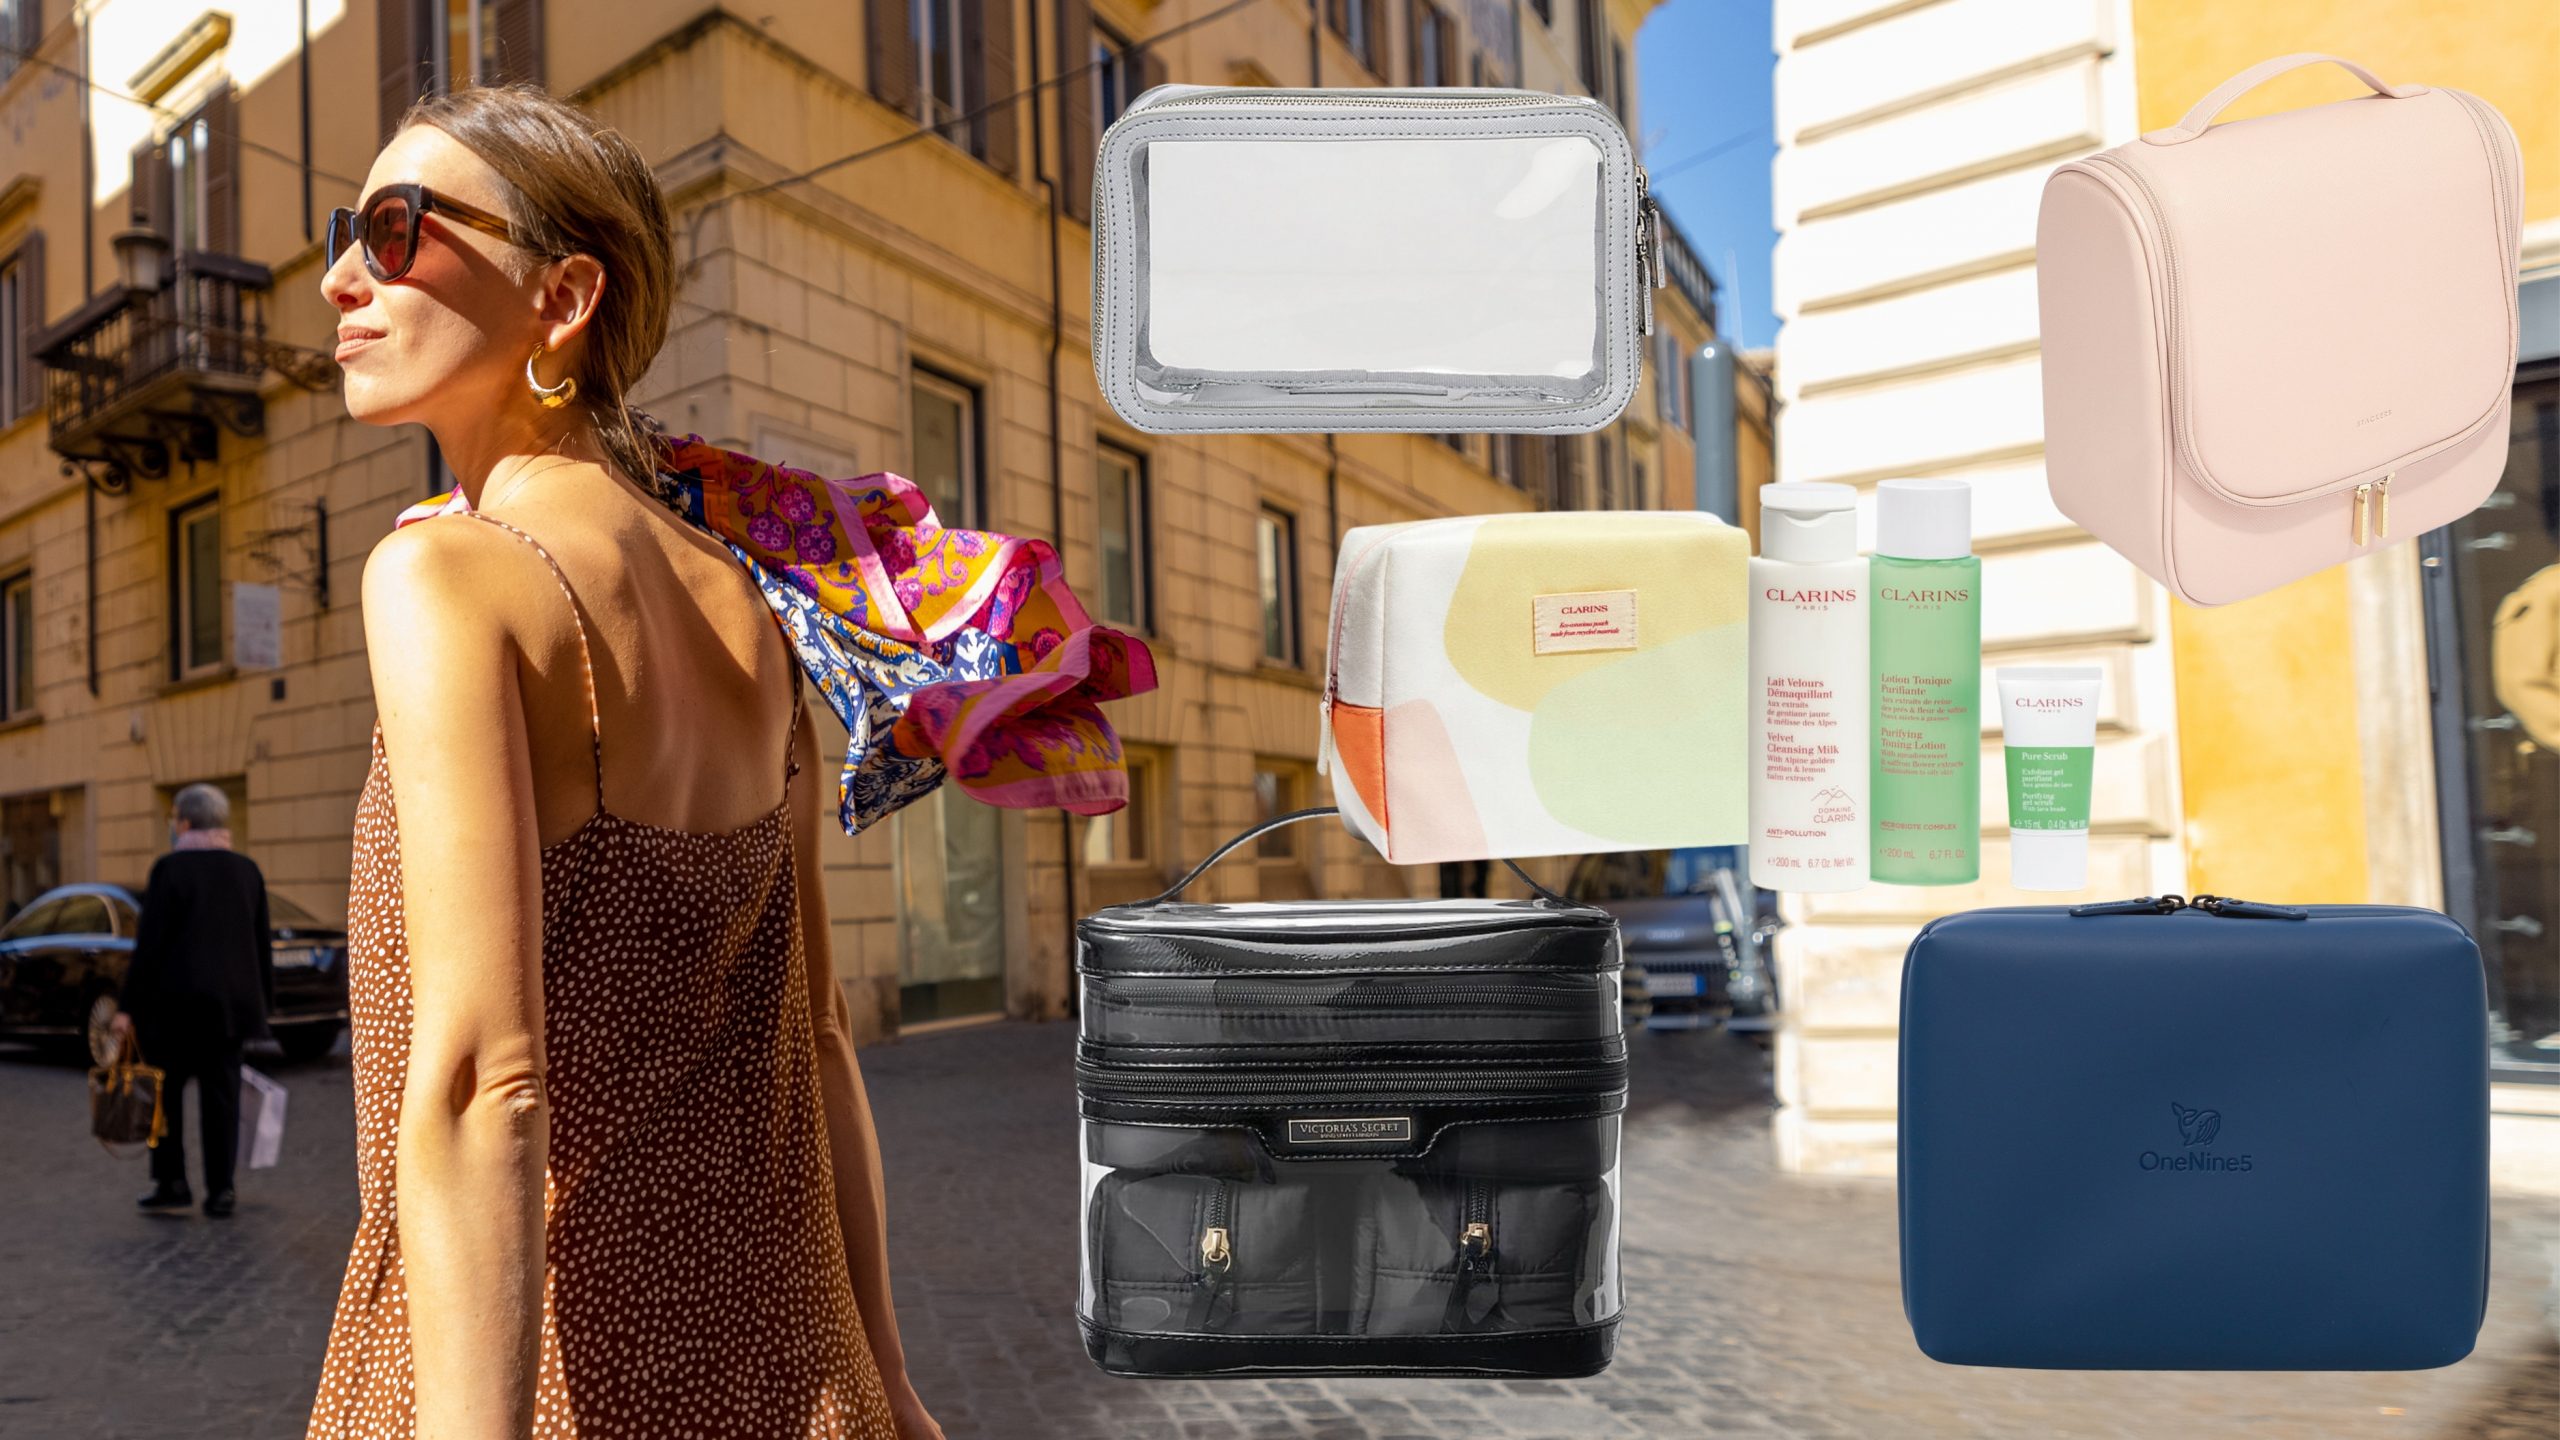 10 Best TSA-Approved Toiletry Bags 2023 - Clear TSA-Compliant Cases